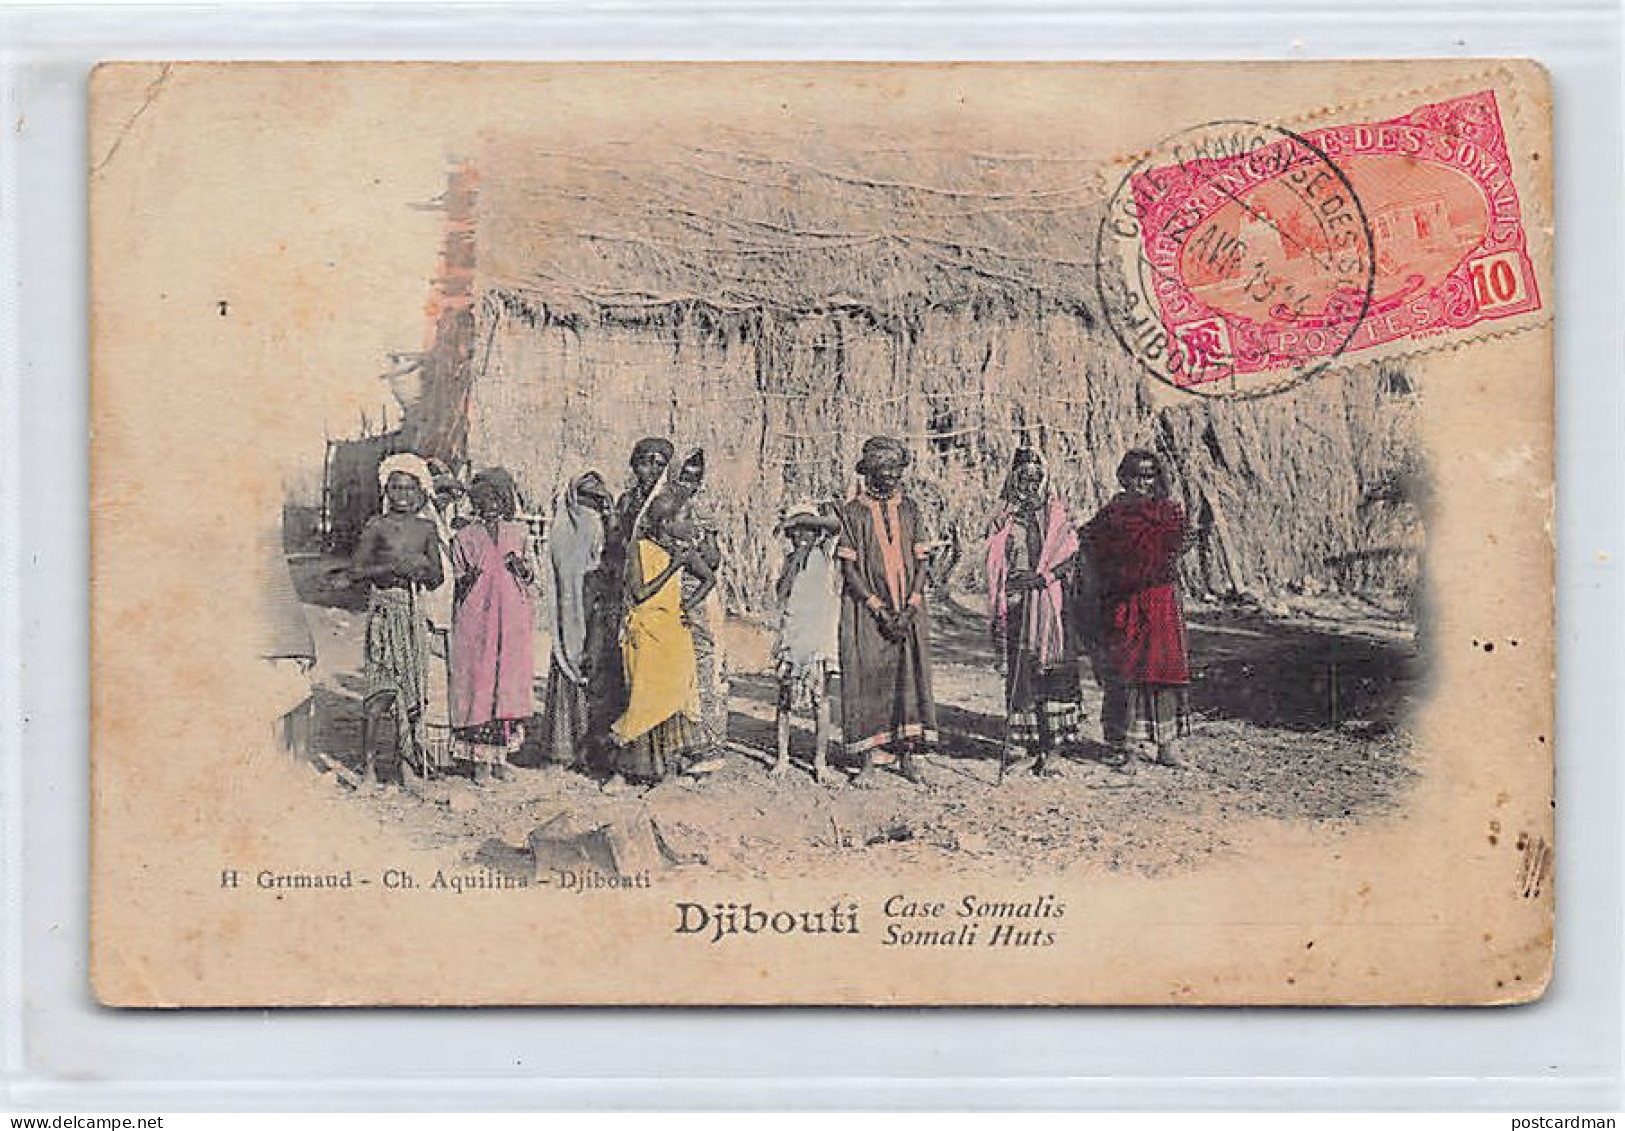 DJIBOUTI - Case Somalie - Ed. H. Grimaud - Ch. Aquilina  - Dschibuti